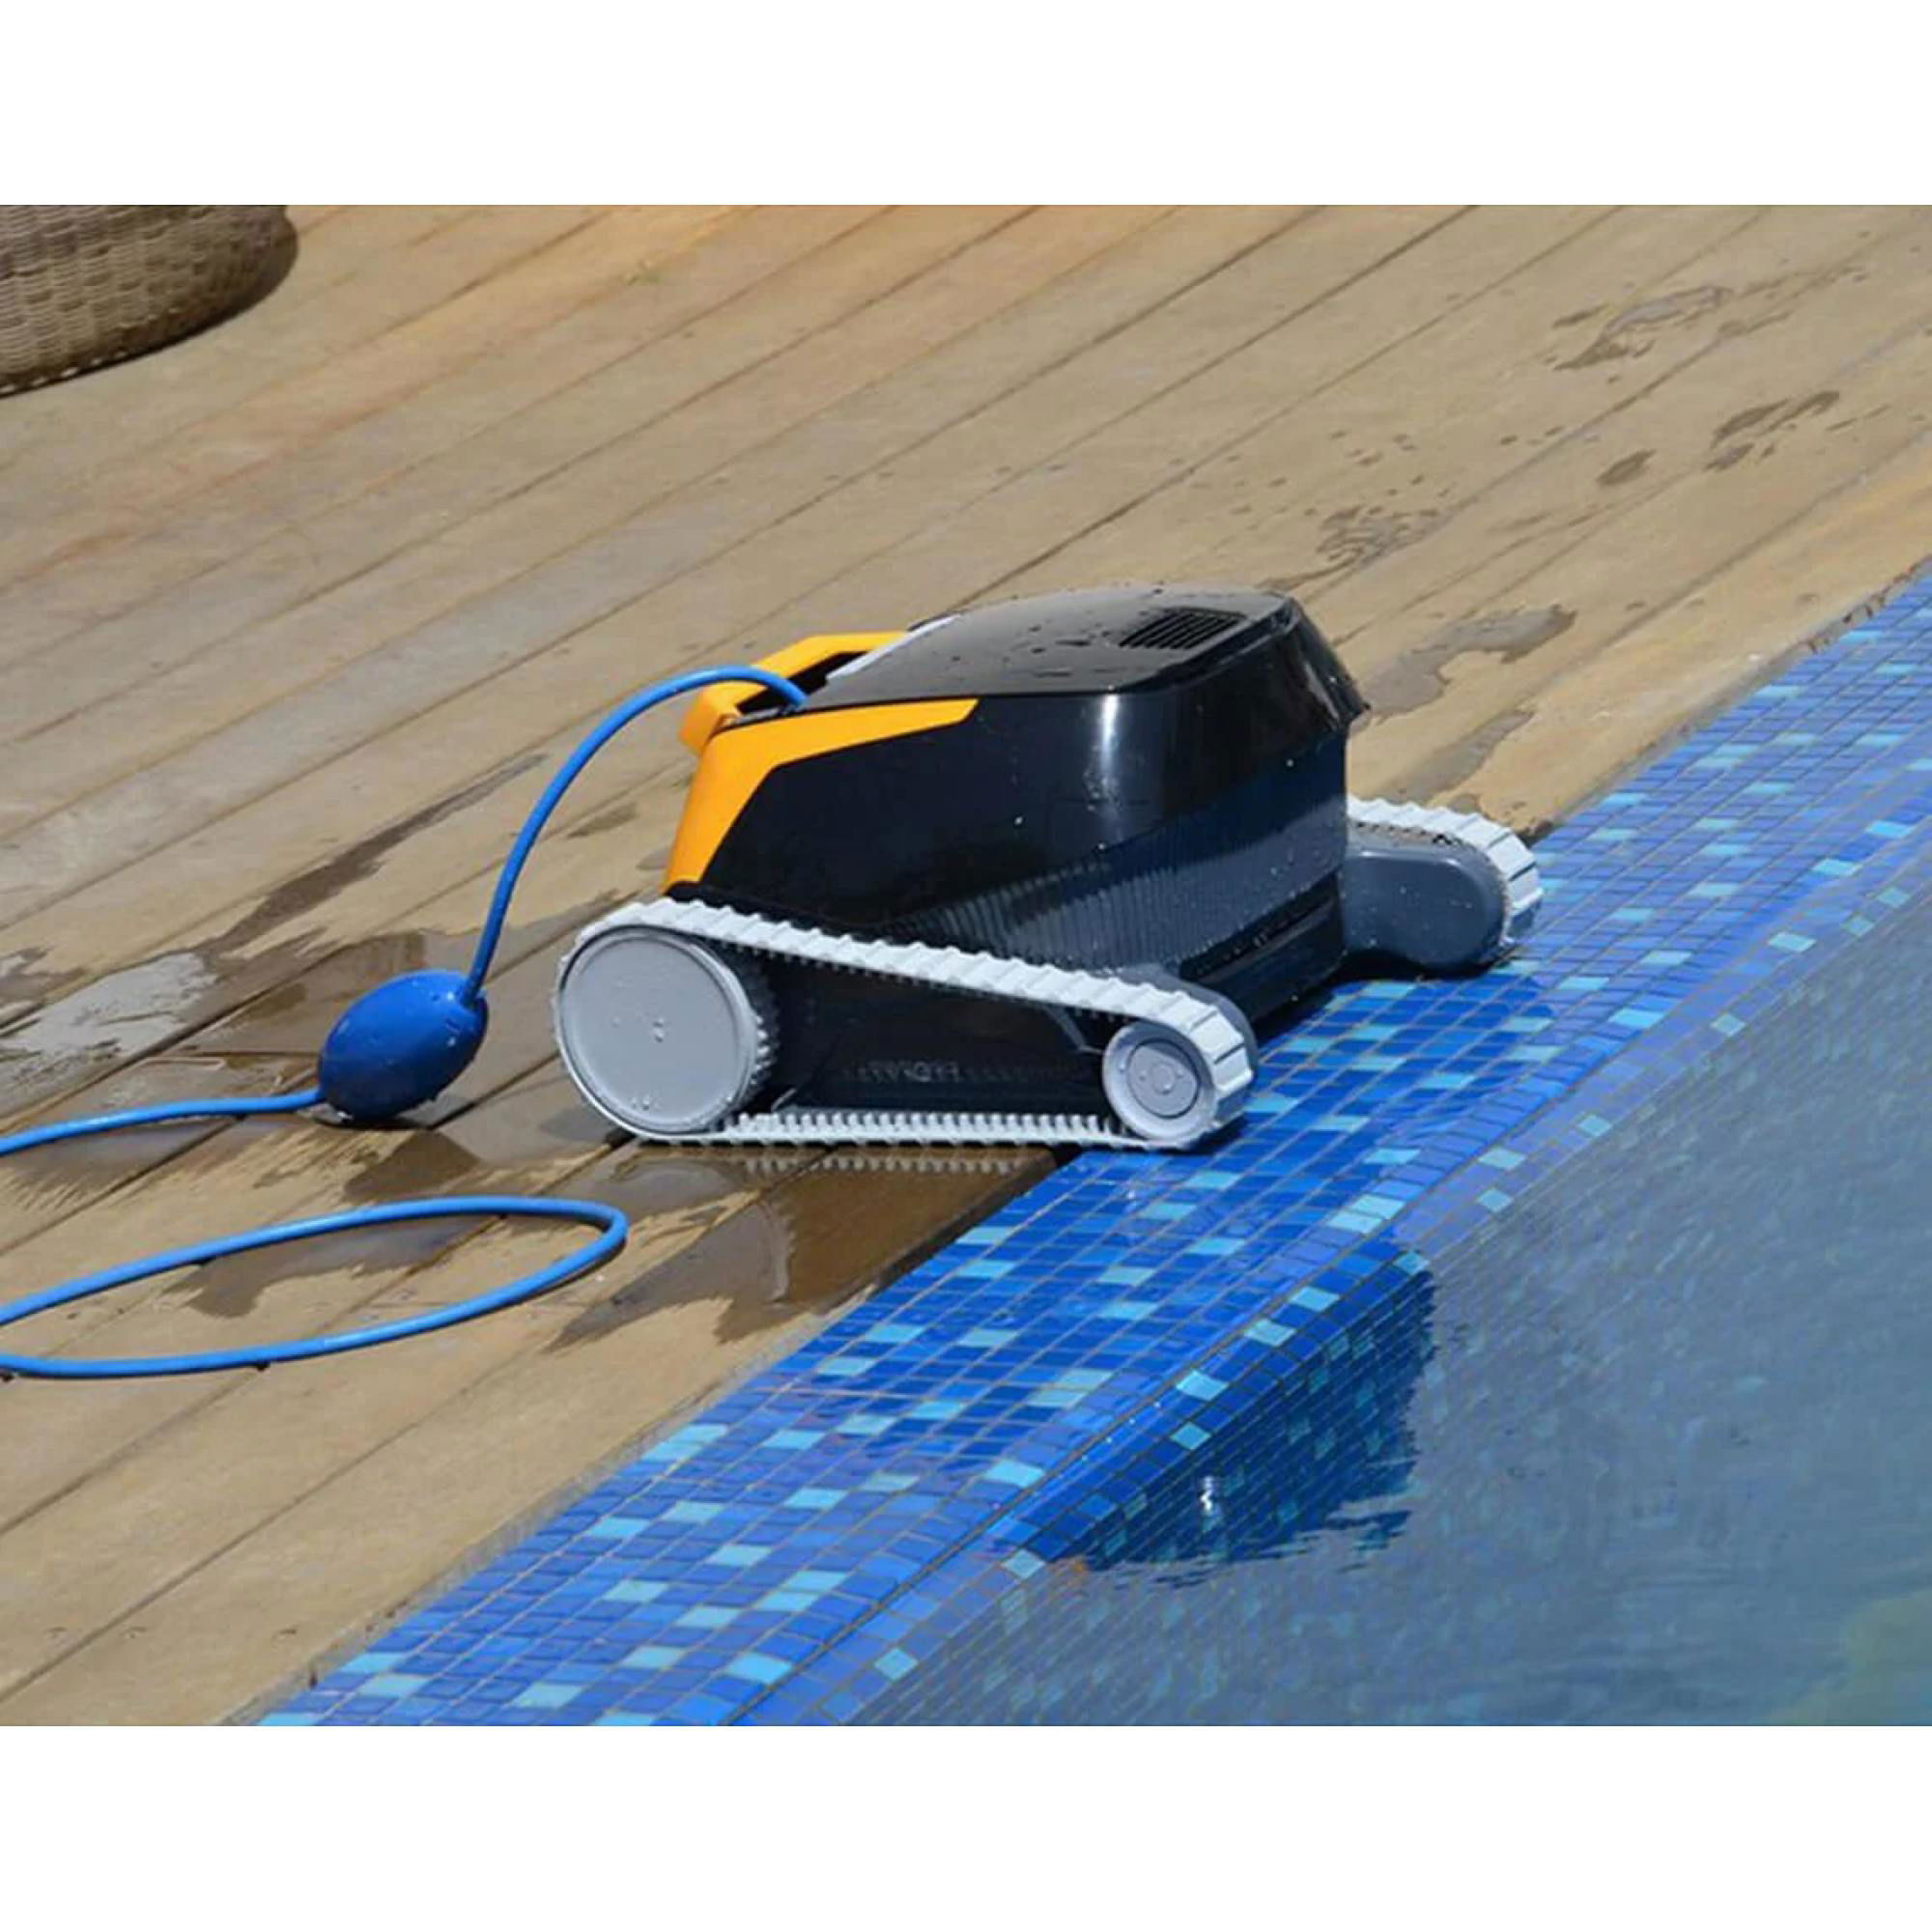 Dolphin E25 Poolroboter mit PVC Bürste